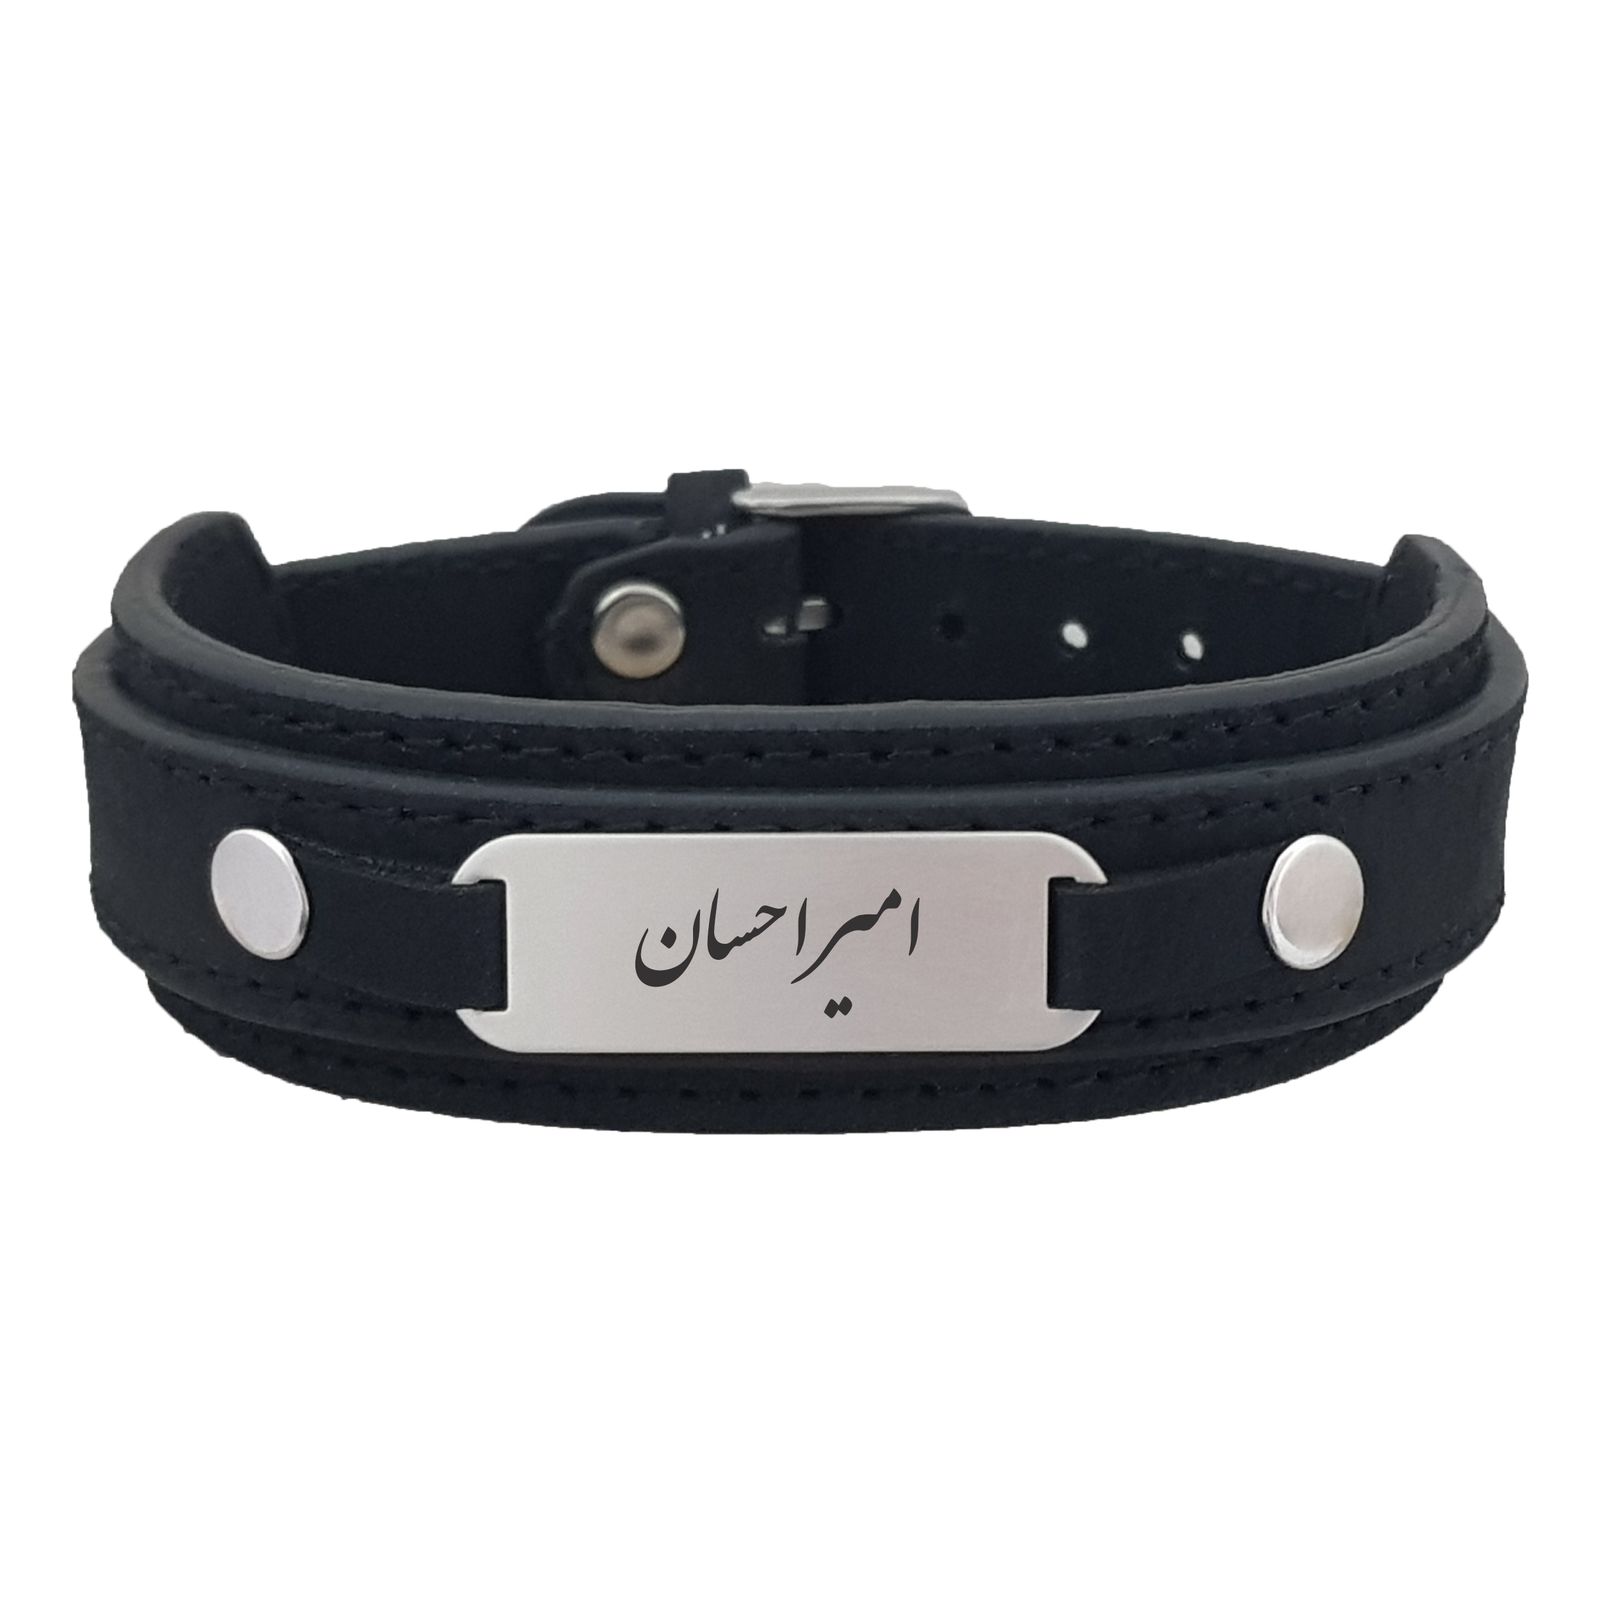 دستبند نقره مردانه ترمه ۱ مدل امیر احسان کد Dcsf0245 -  - 1